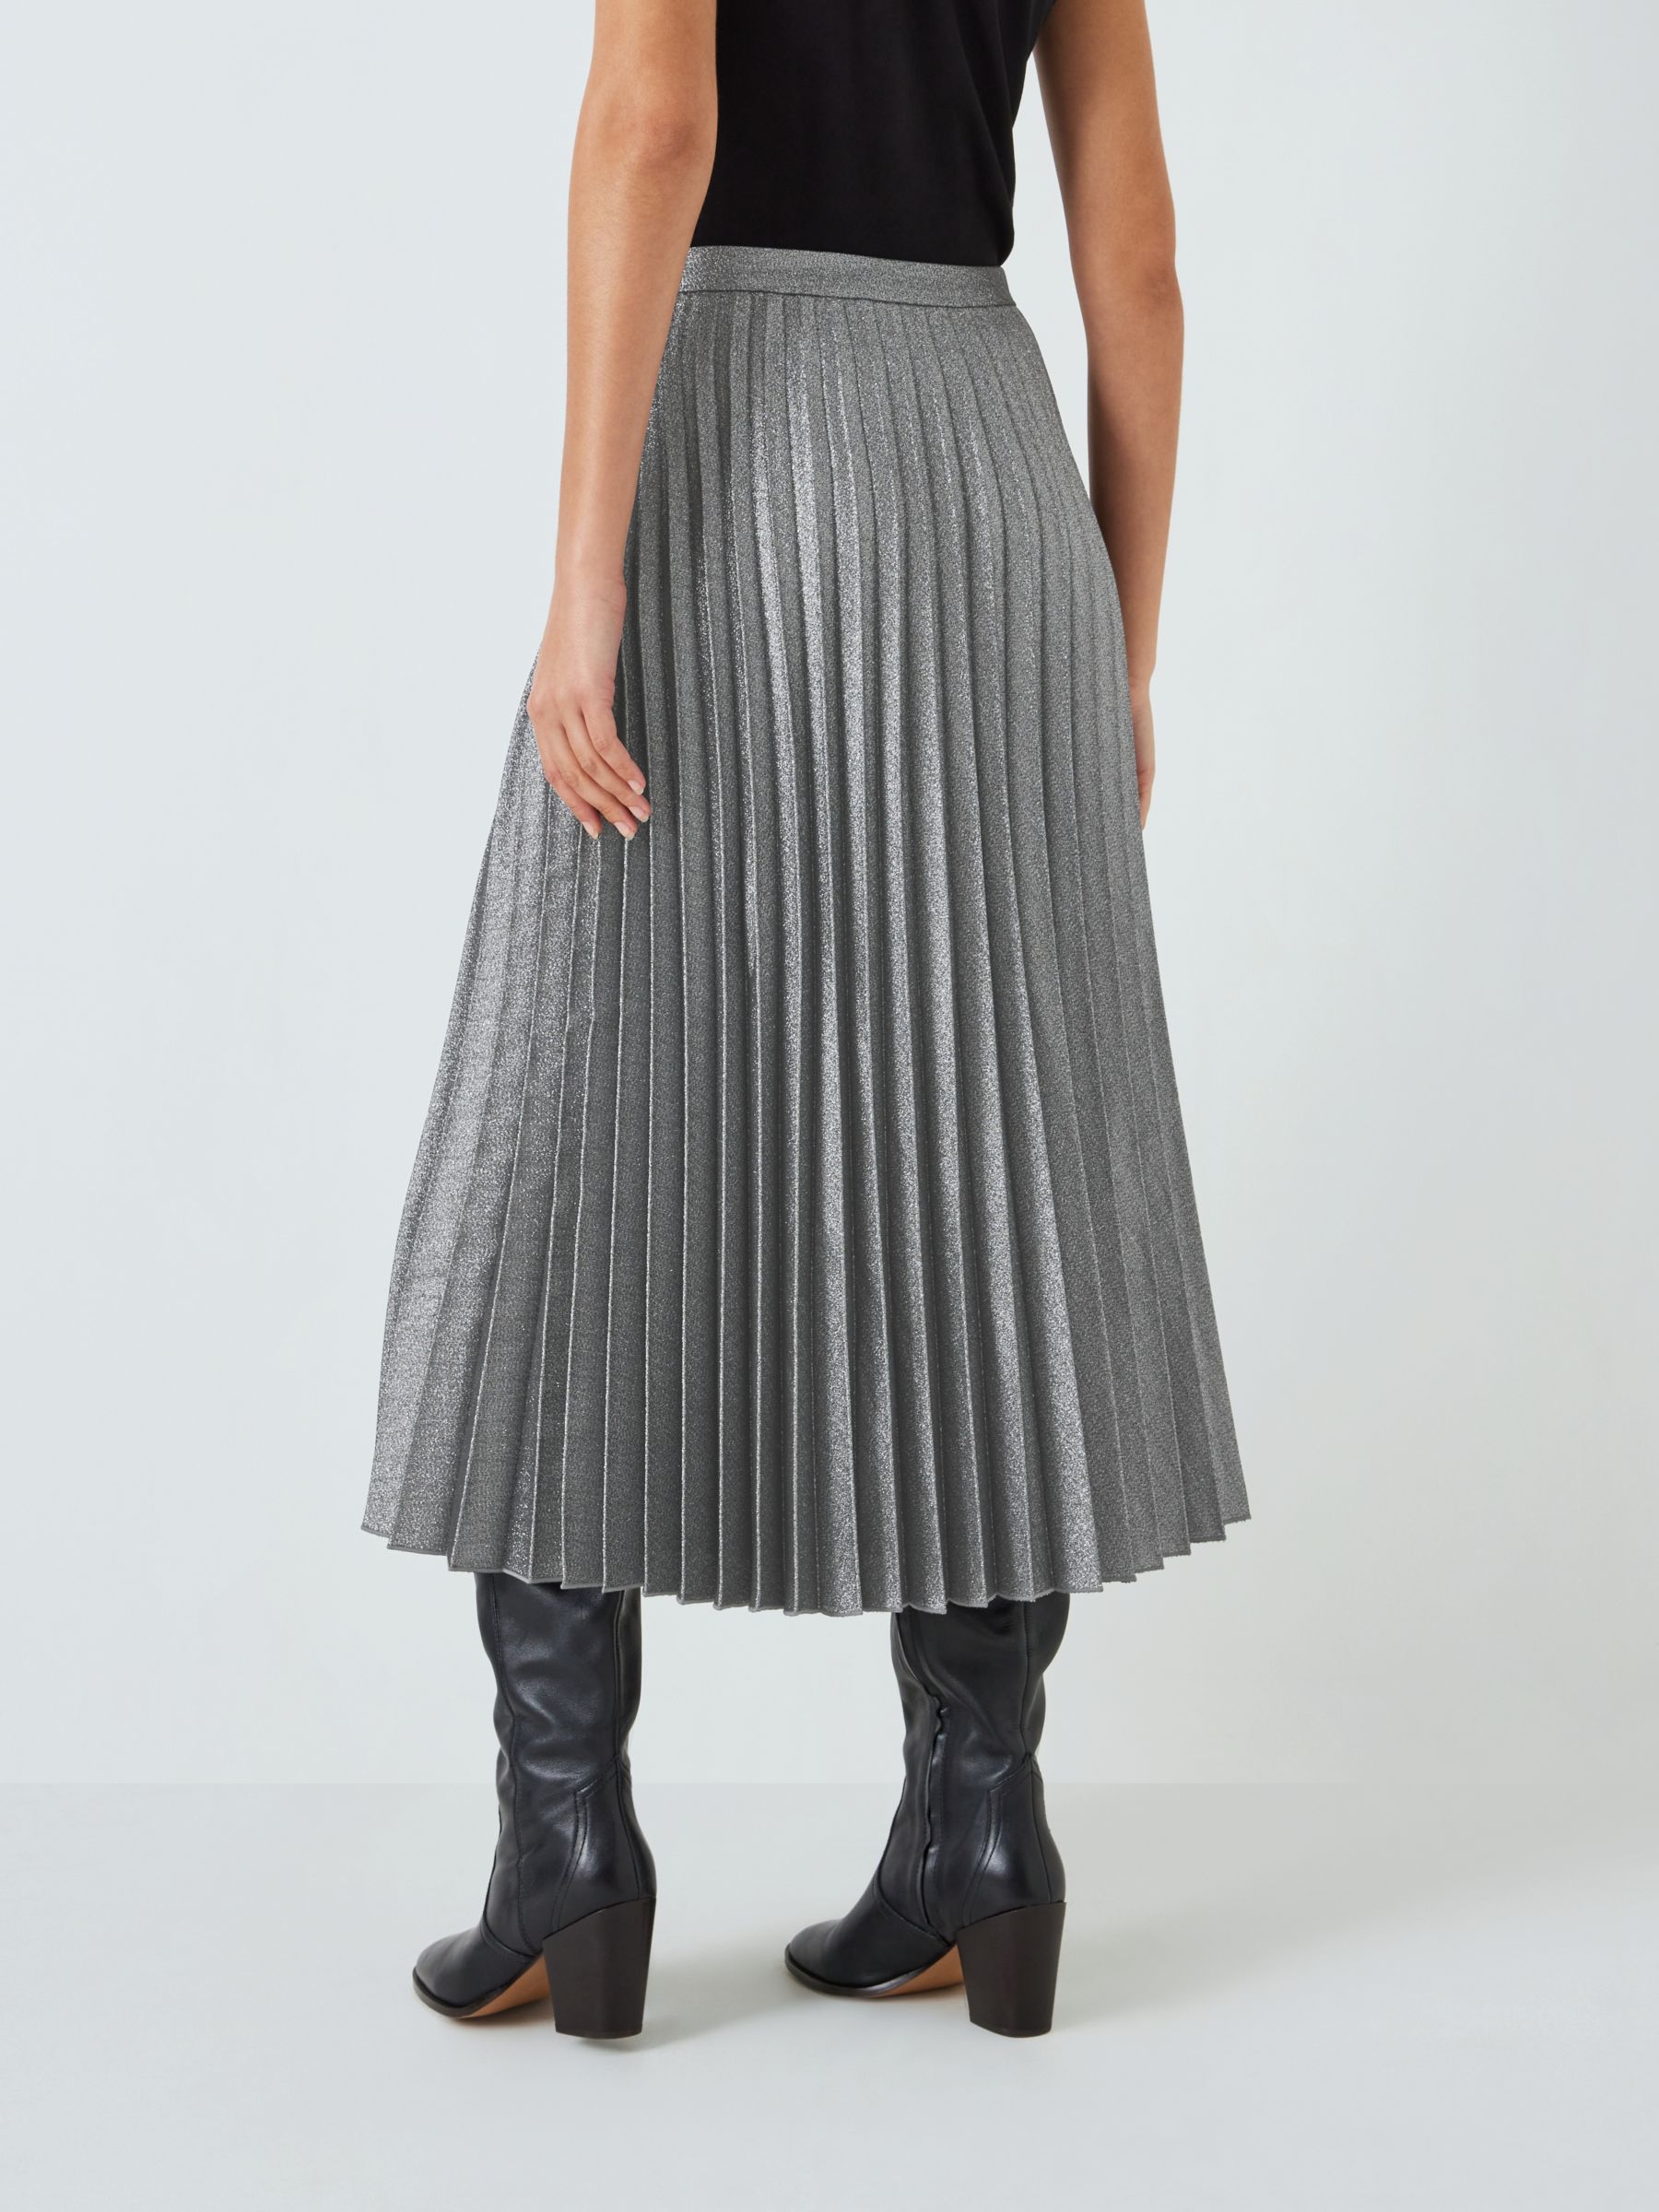 John Lewis Metallic Pleated Skirt, Black/Silver at John Lewis & Partners